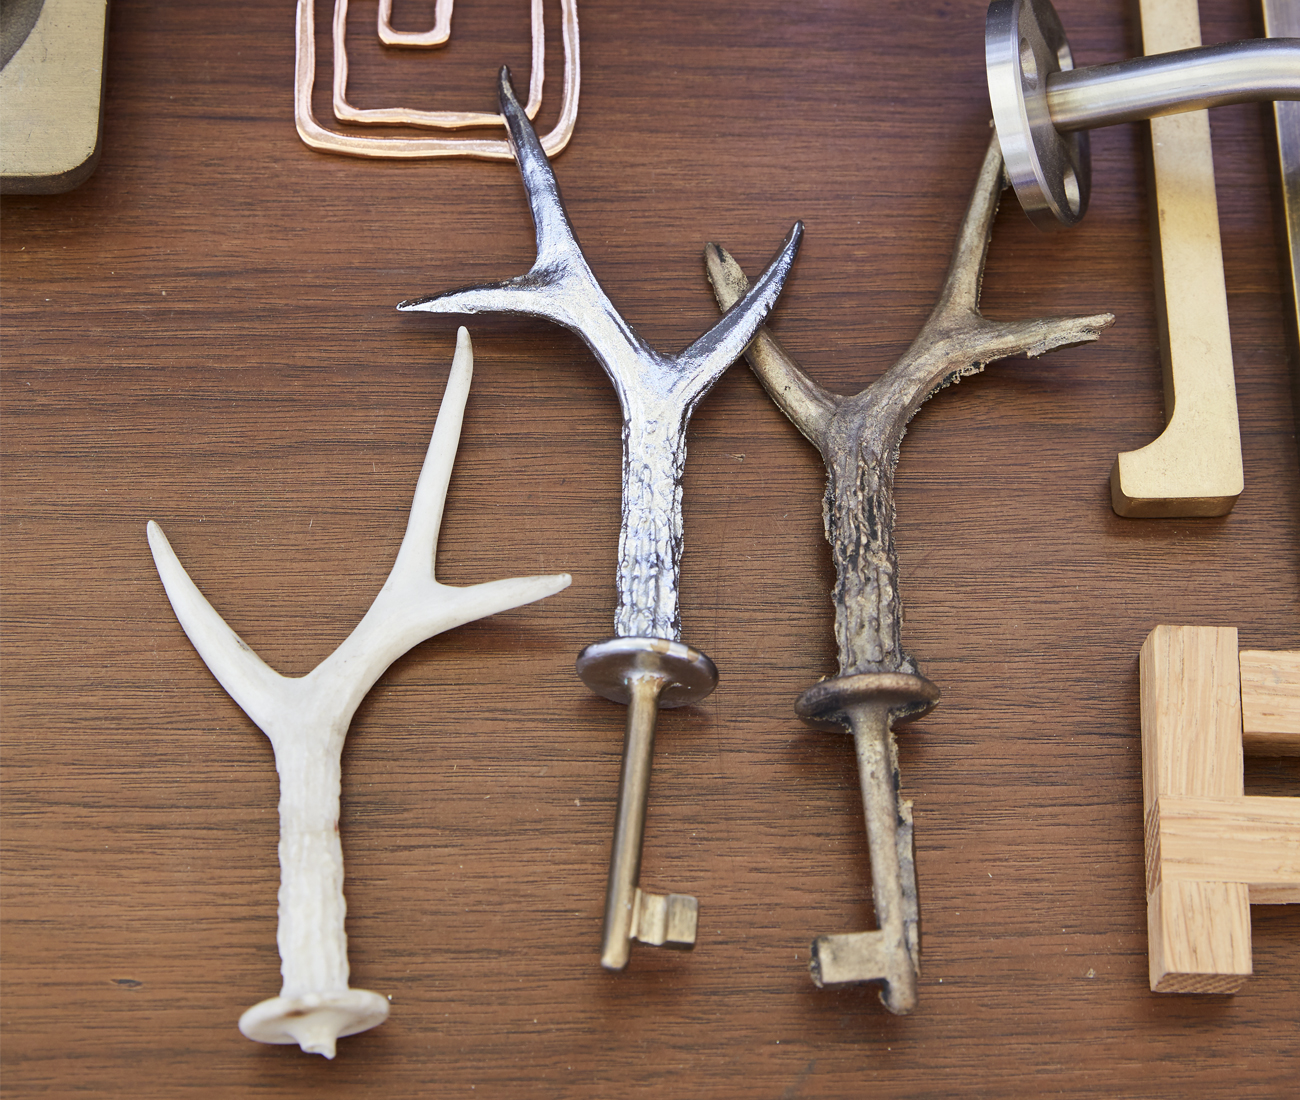 Cast bronze keys sit among custom hinges and handles.